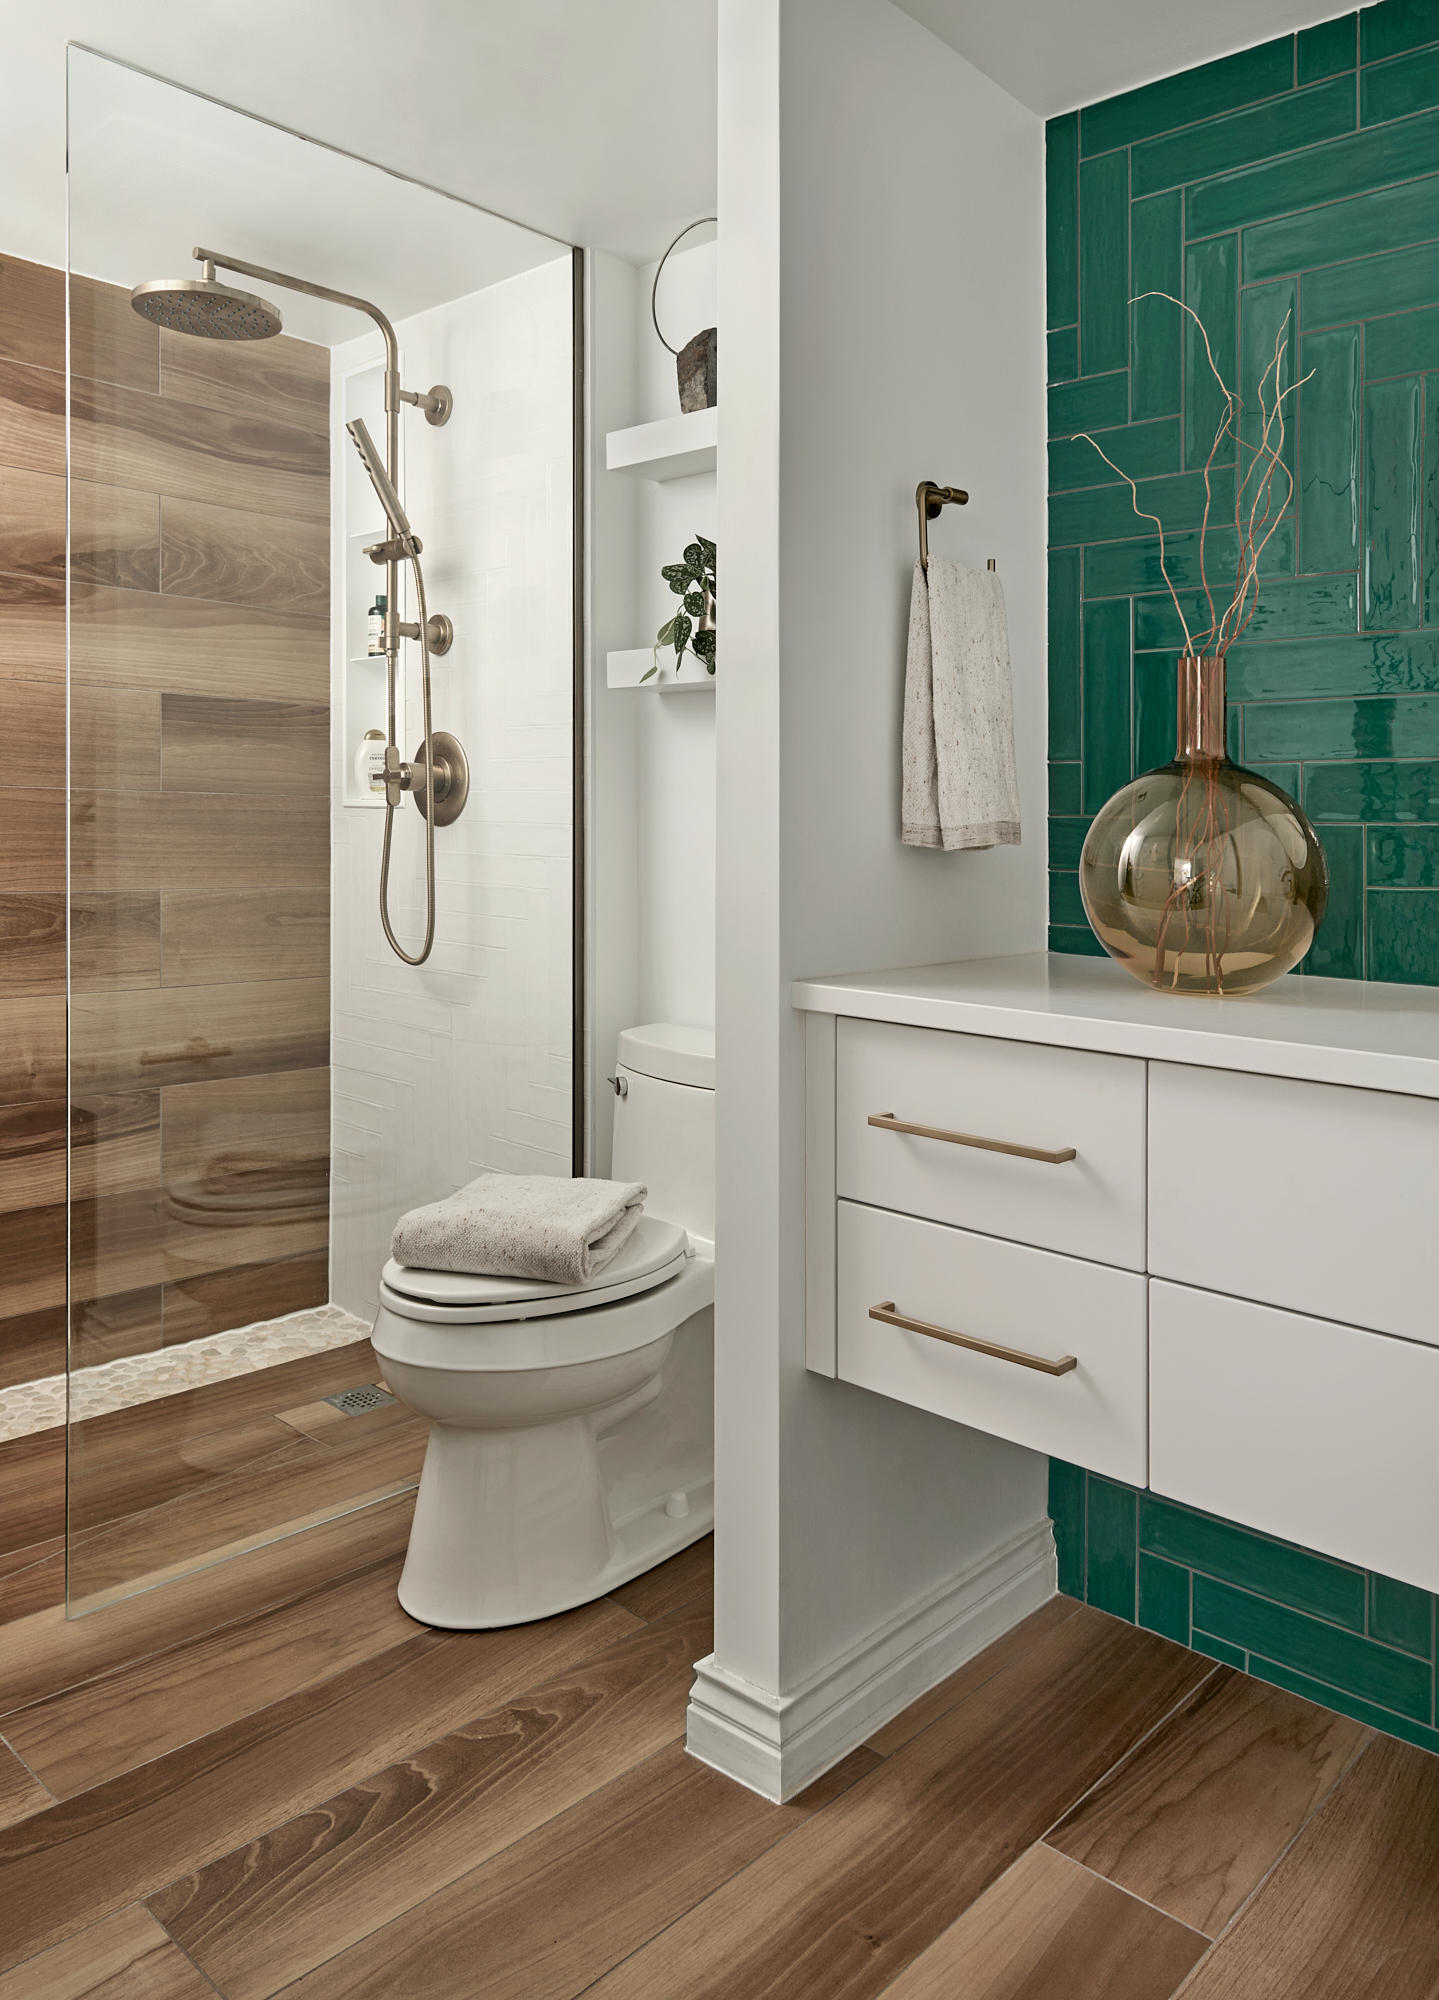 Best Residential Bathroom Design Under 75 sq ft - 03